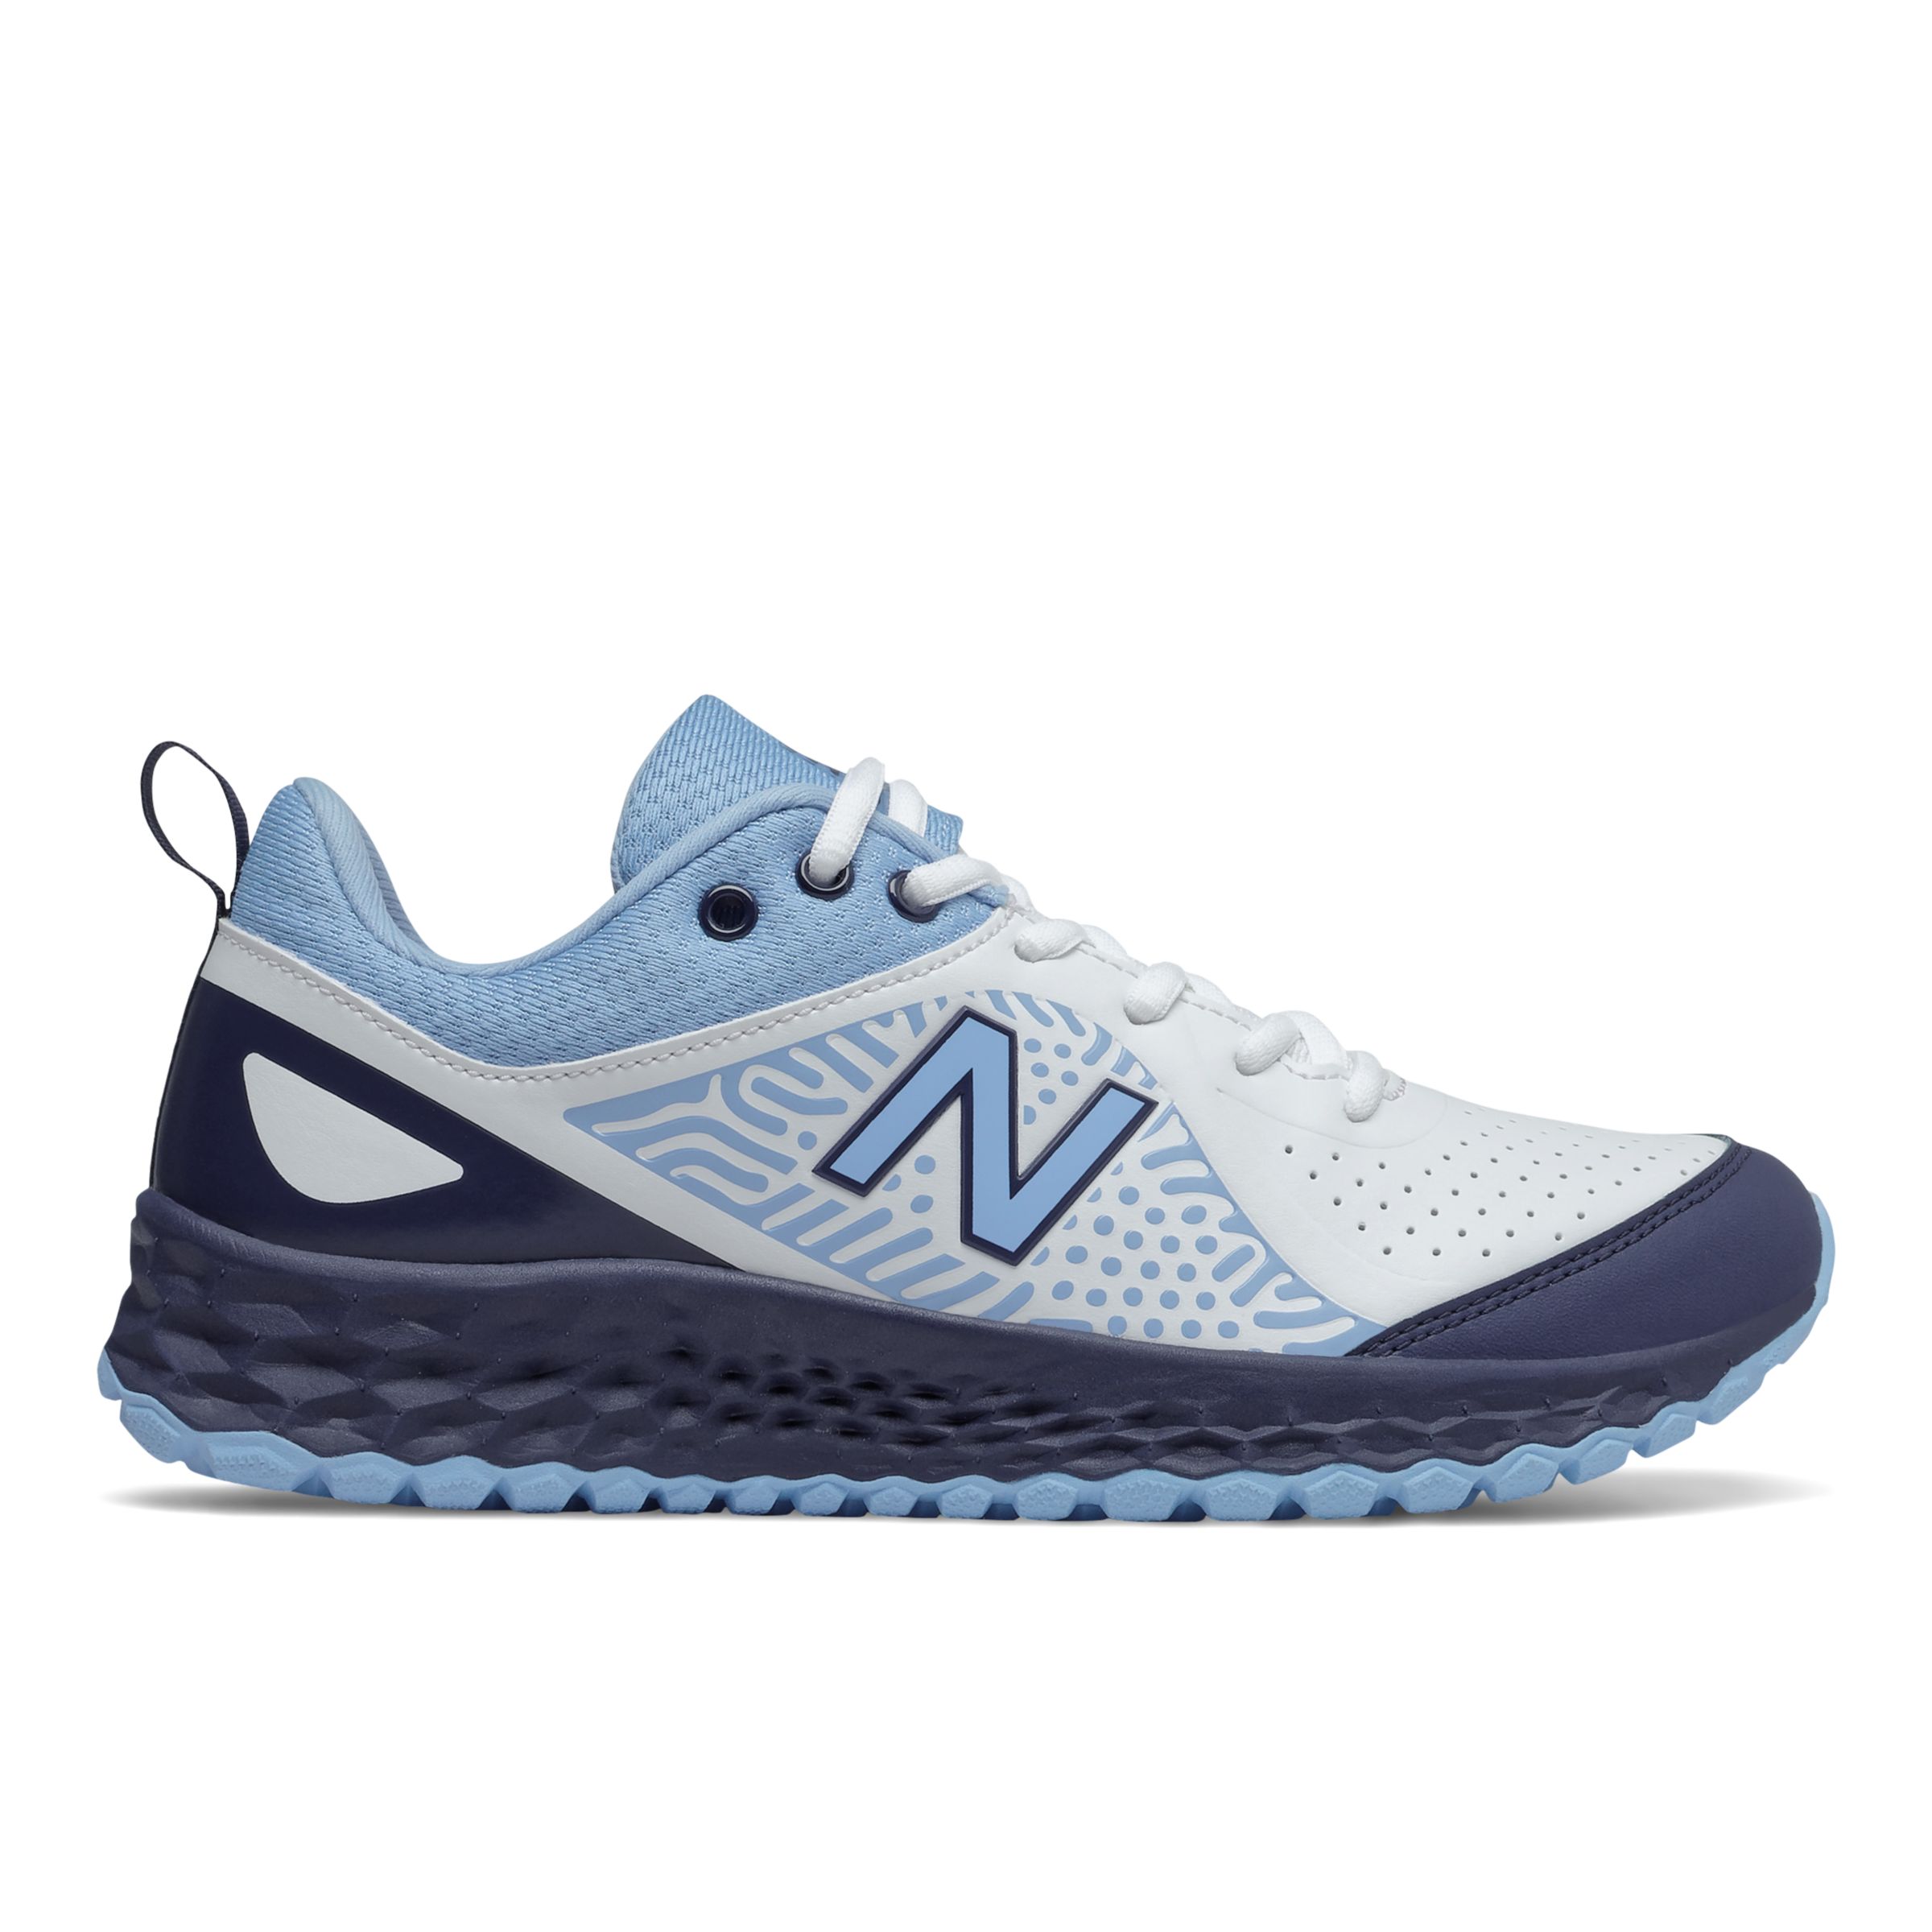 navy blue new balance turf shoes